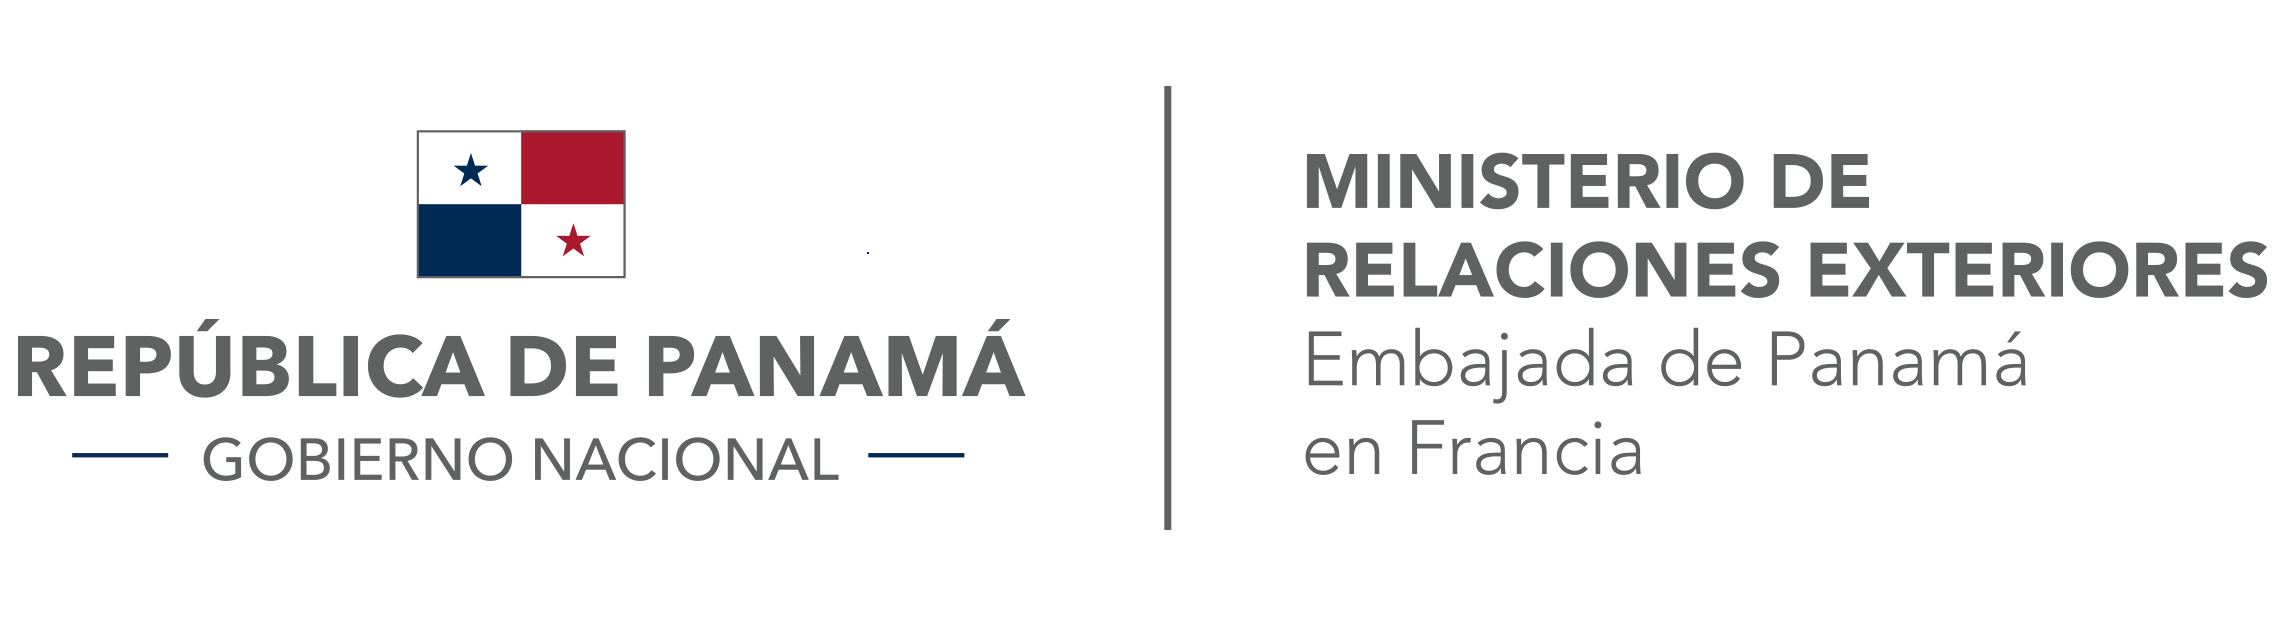 Panama en France - Embajada de Panamá en Francia - Ambassade du Panama en France